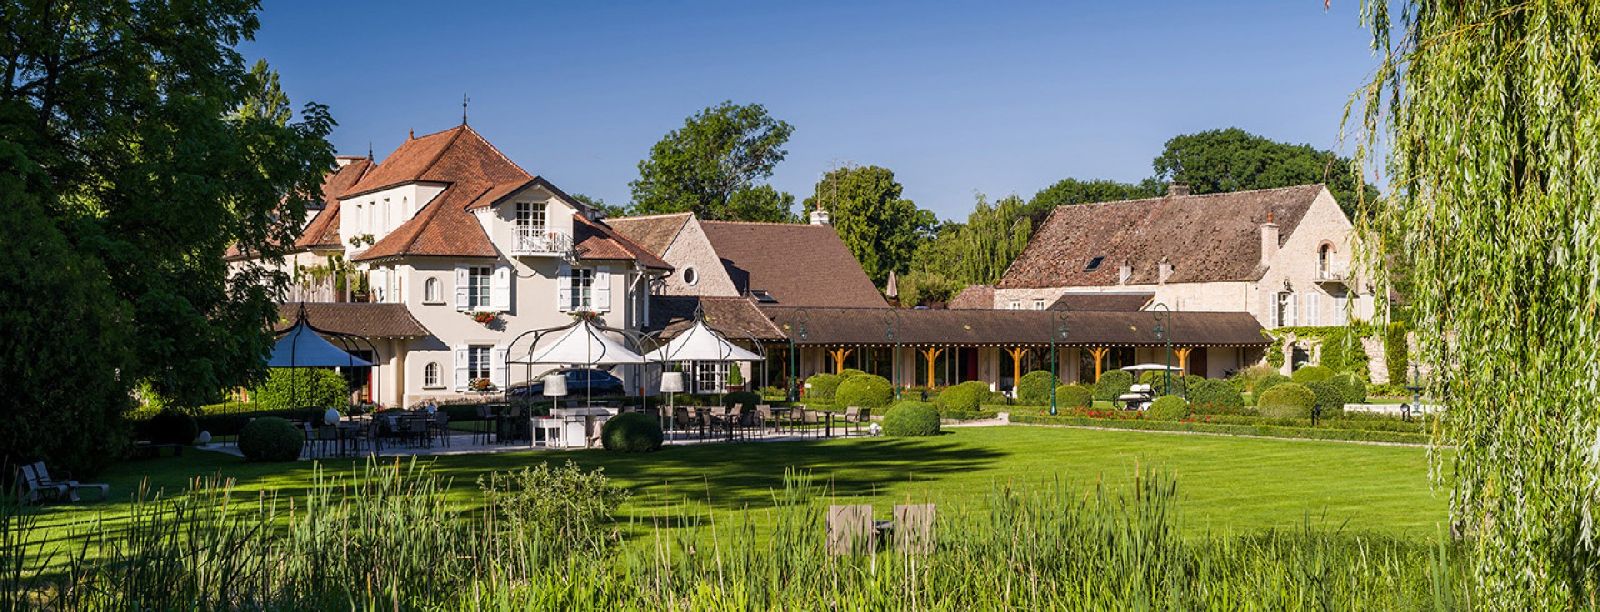 golf-expedition-golf-reizen-frankrijk-regio-bougogne-hotel-de-la-poste-hotel-bos-terras-zitplek-tuin